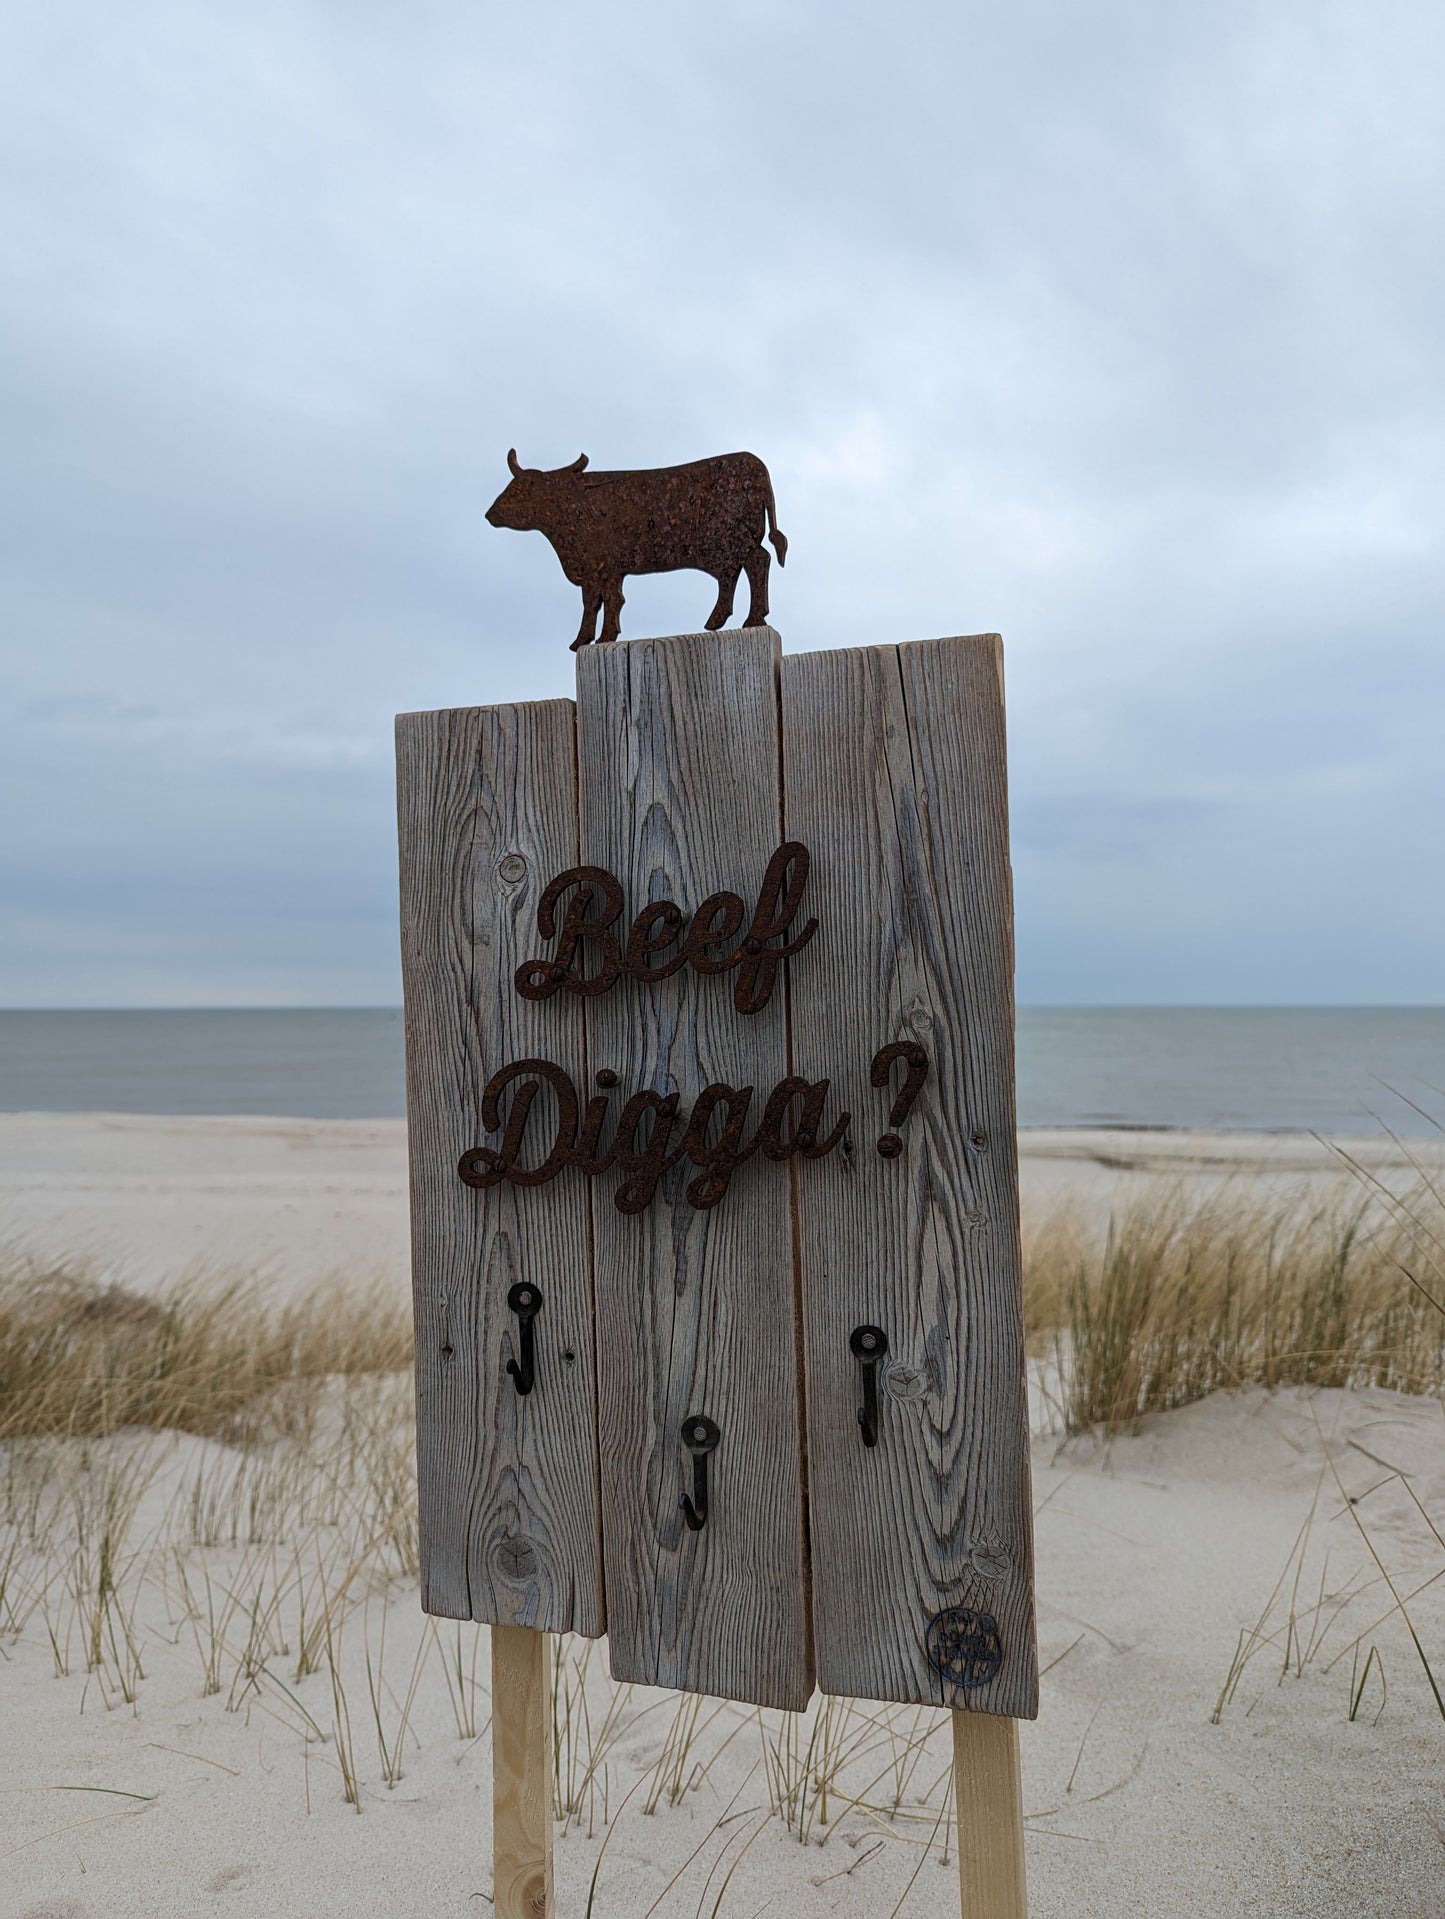 Driftwood-Schild "Beef Digga?"